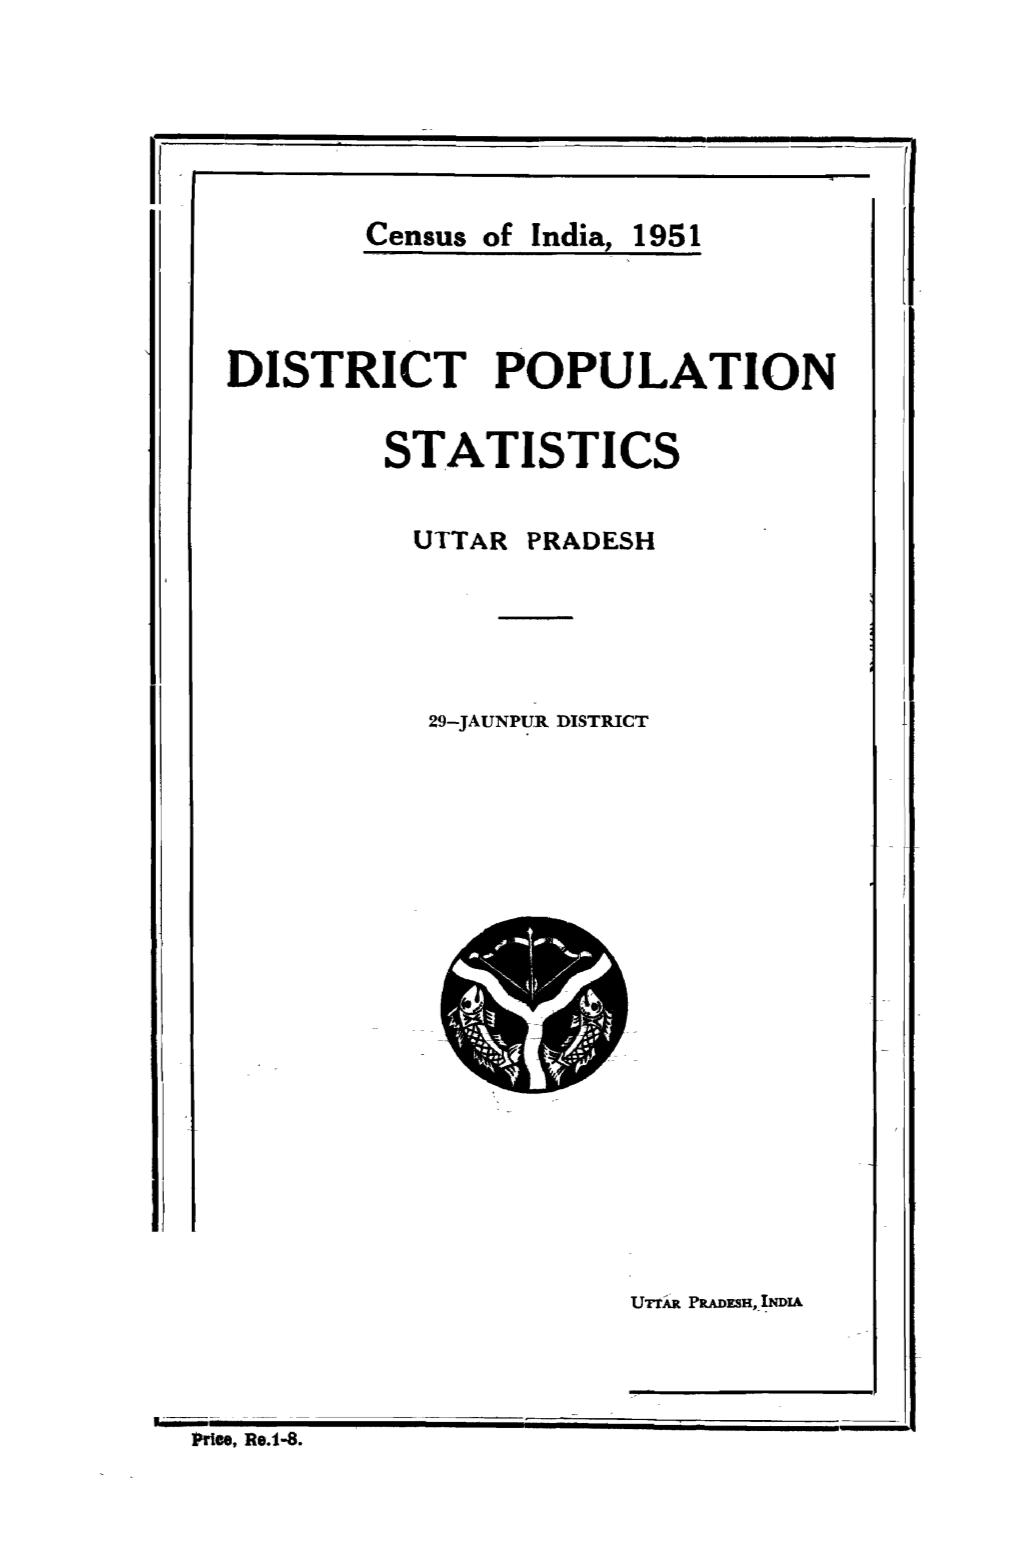 District Population Statistics, 29-Jaunpur, Uttar Pradesh